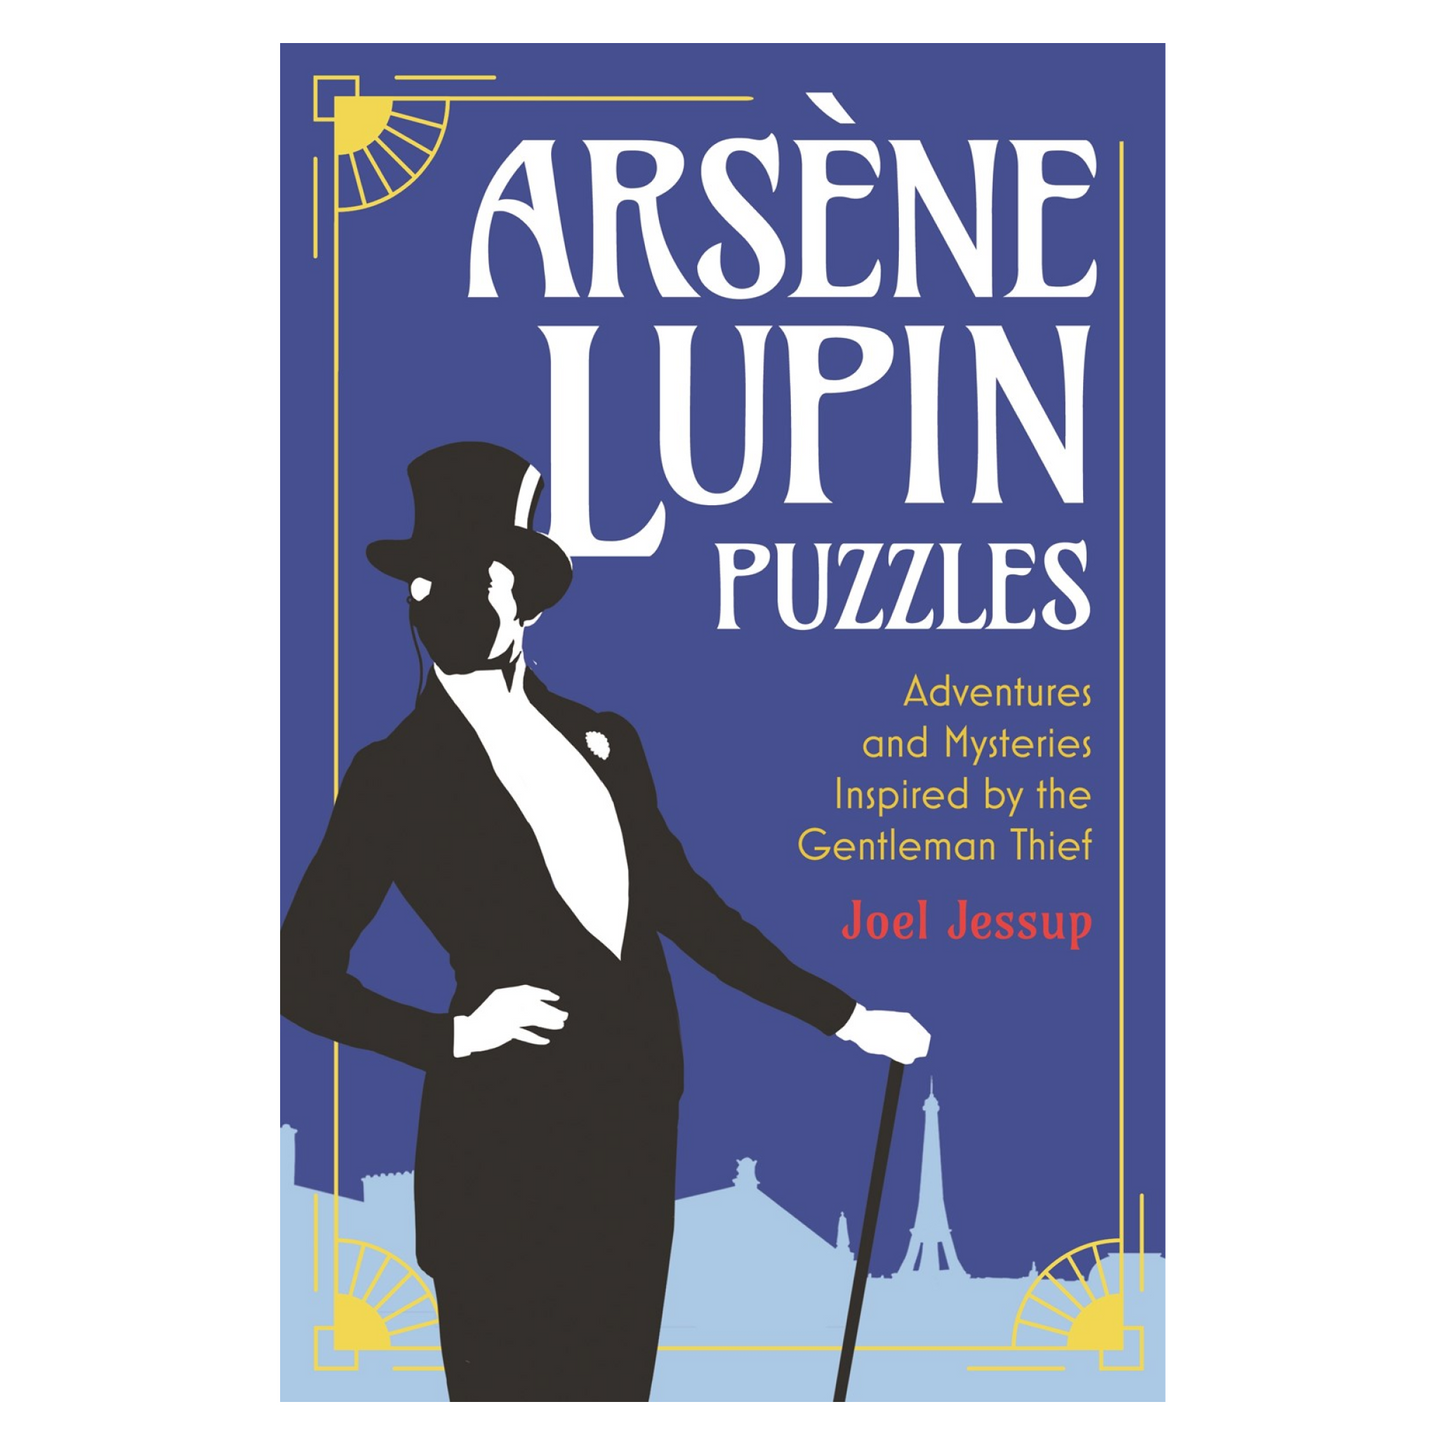 Arsene Lupin Puzzles